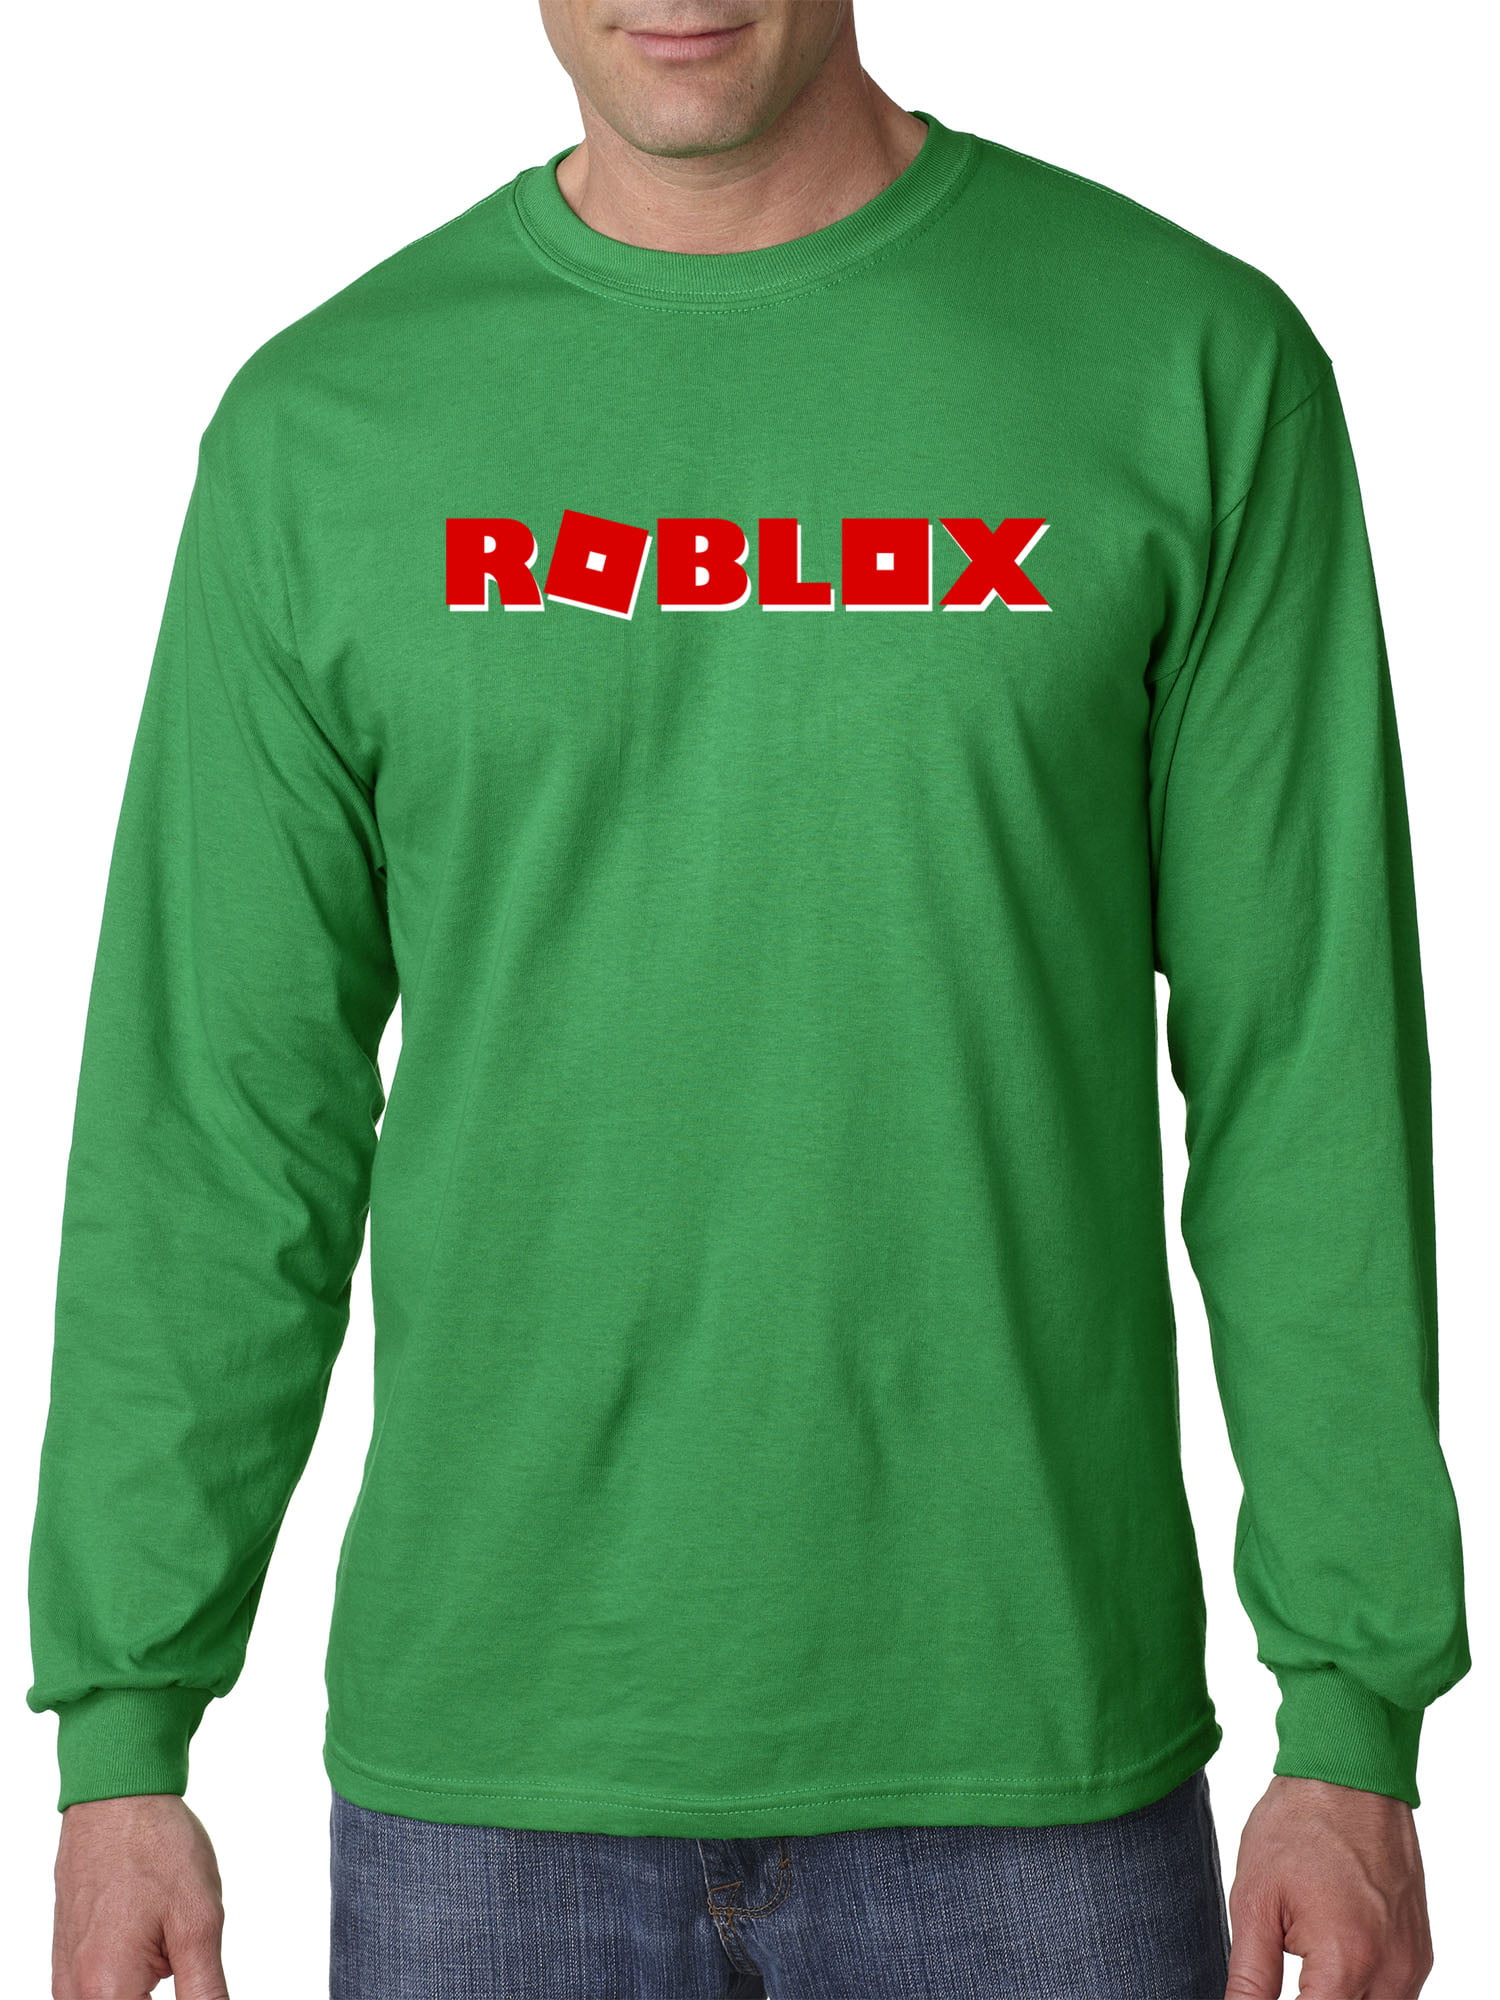 New Way New Way 922 Unisex Long Sleeve T Shirt Roblox Logo Game Filled Medium Kelly Green Walmart Com Walmart Com - roblox green jacket